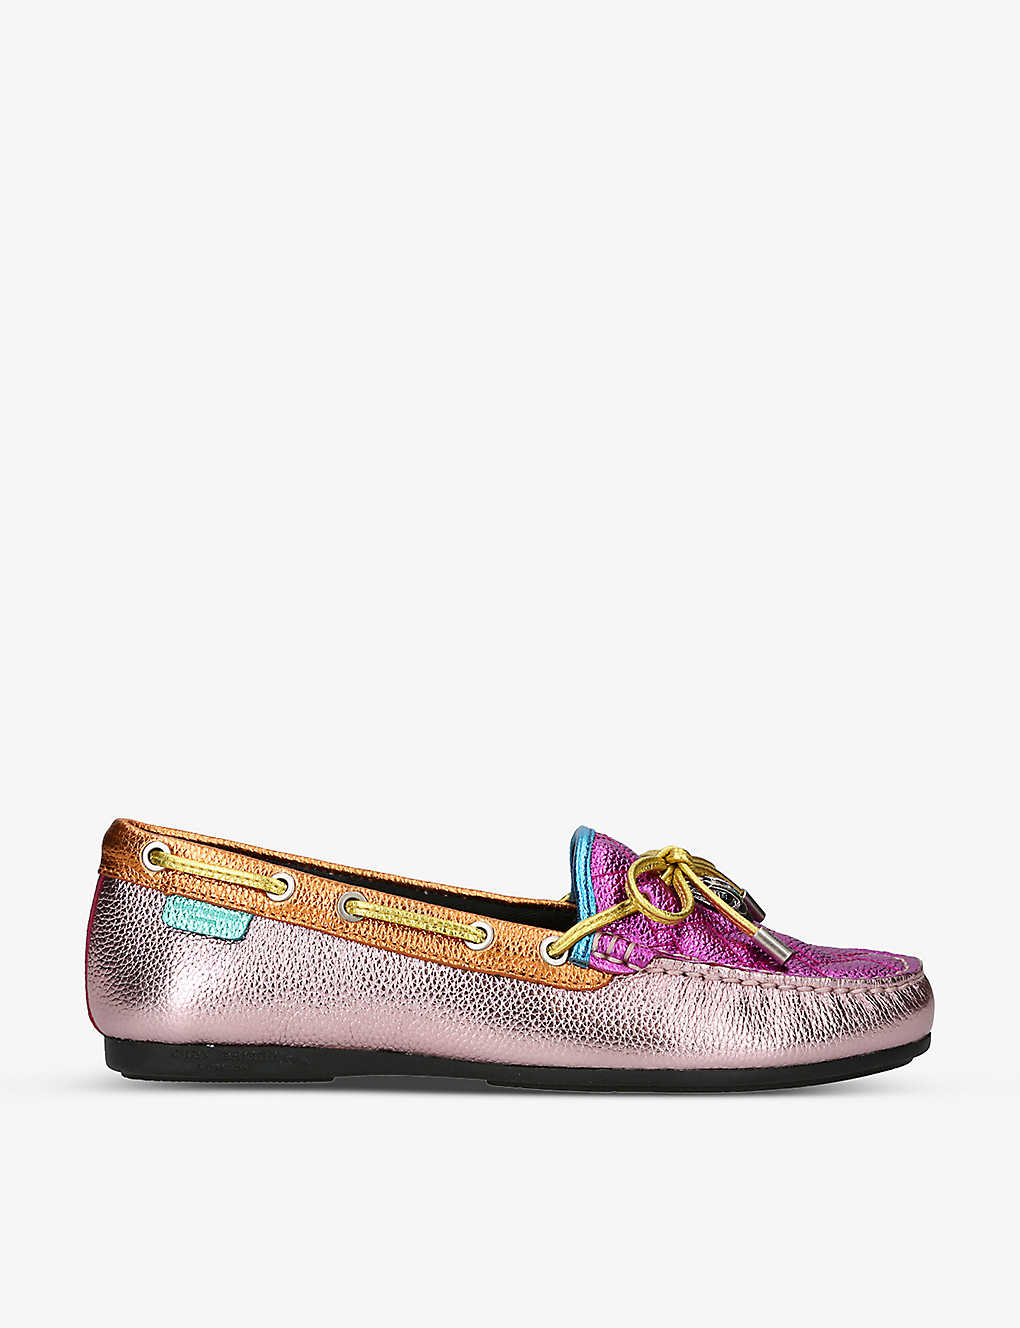 Shop Kurt Geiger London Women's Pink Comb Eagle-embellished Rainbow-print Leather Moccasin Shoes